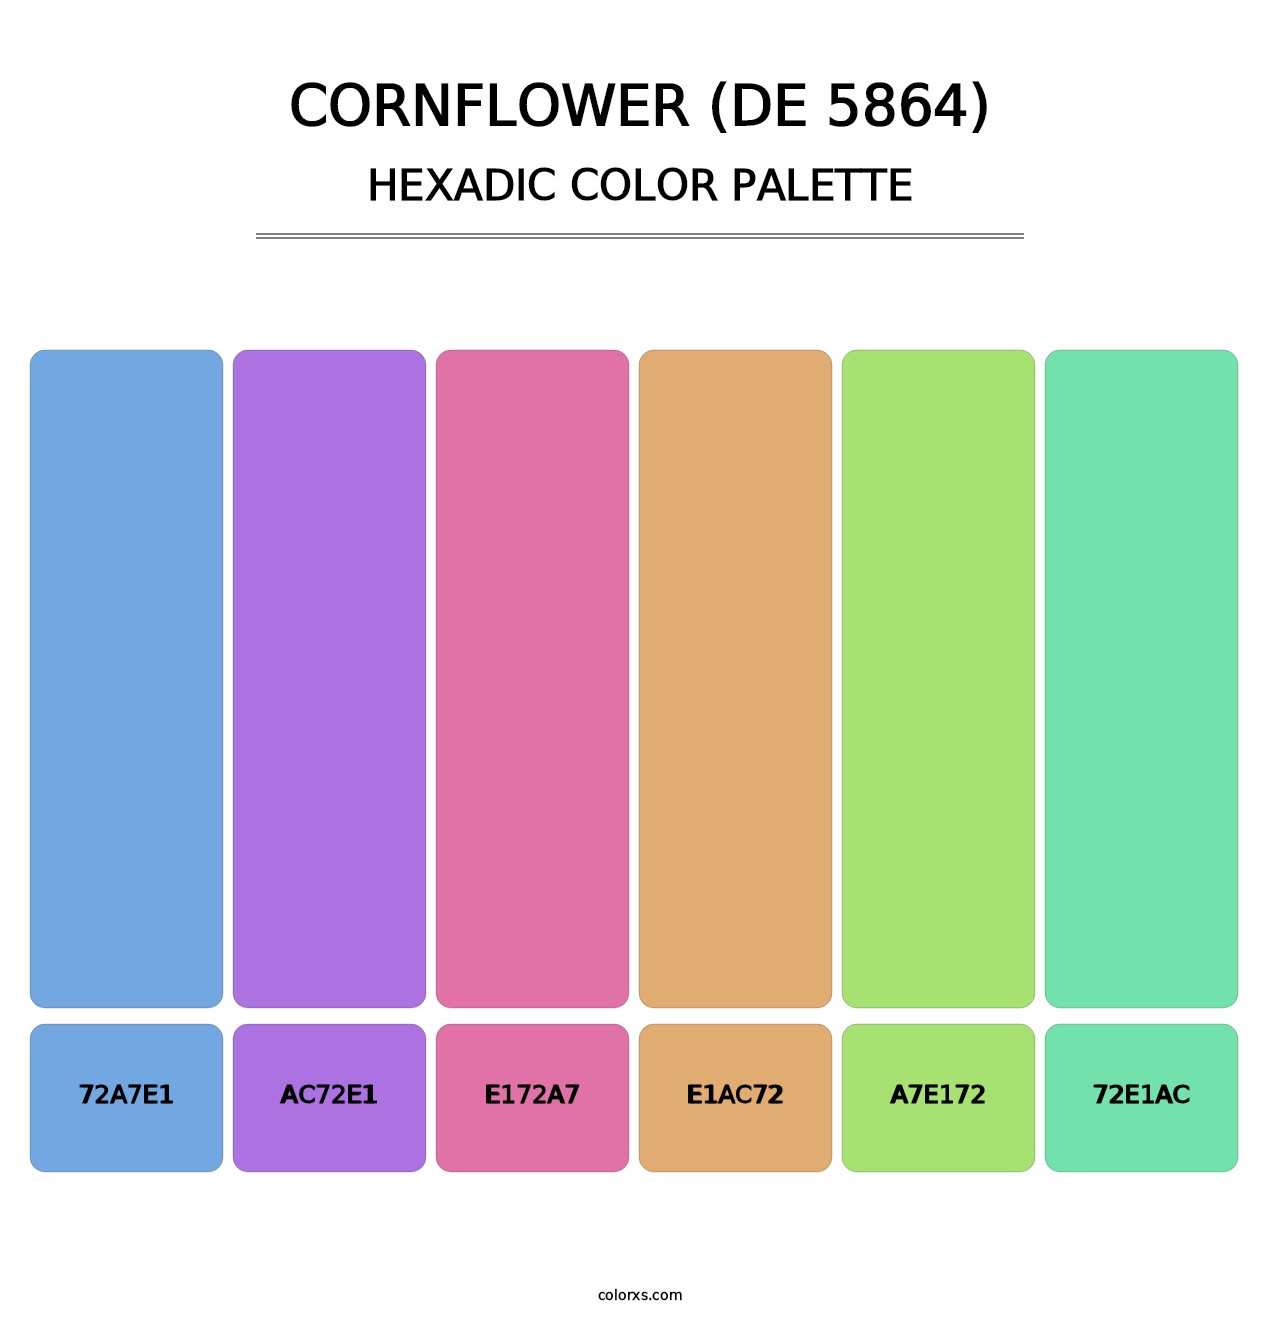 Cornflower (DE 5864) - Hexadic Color Palette